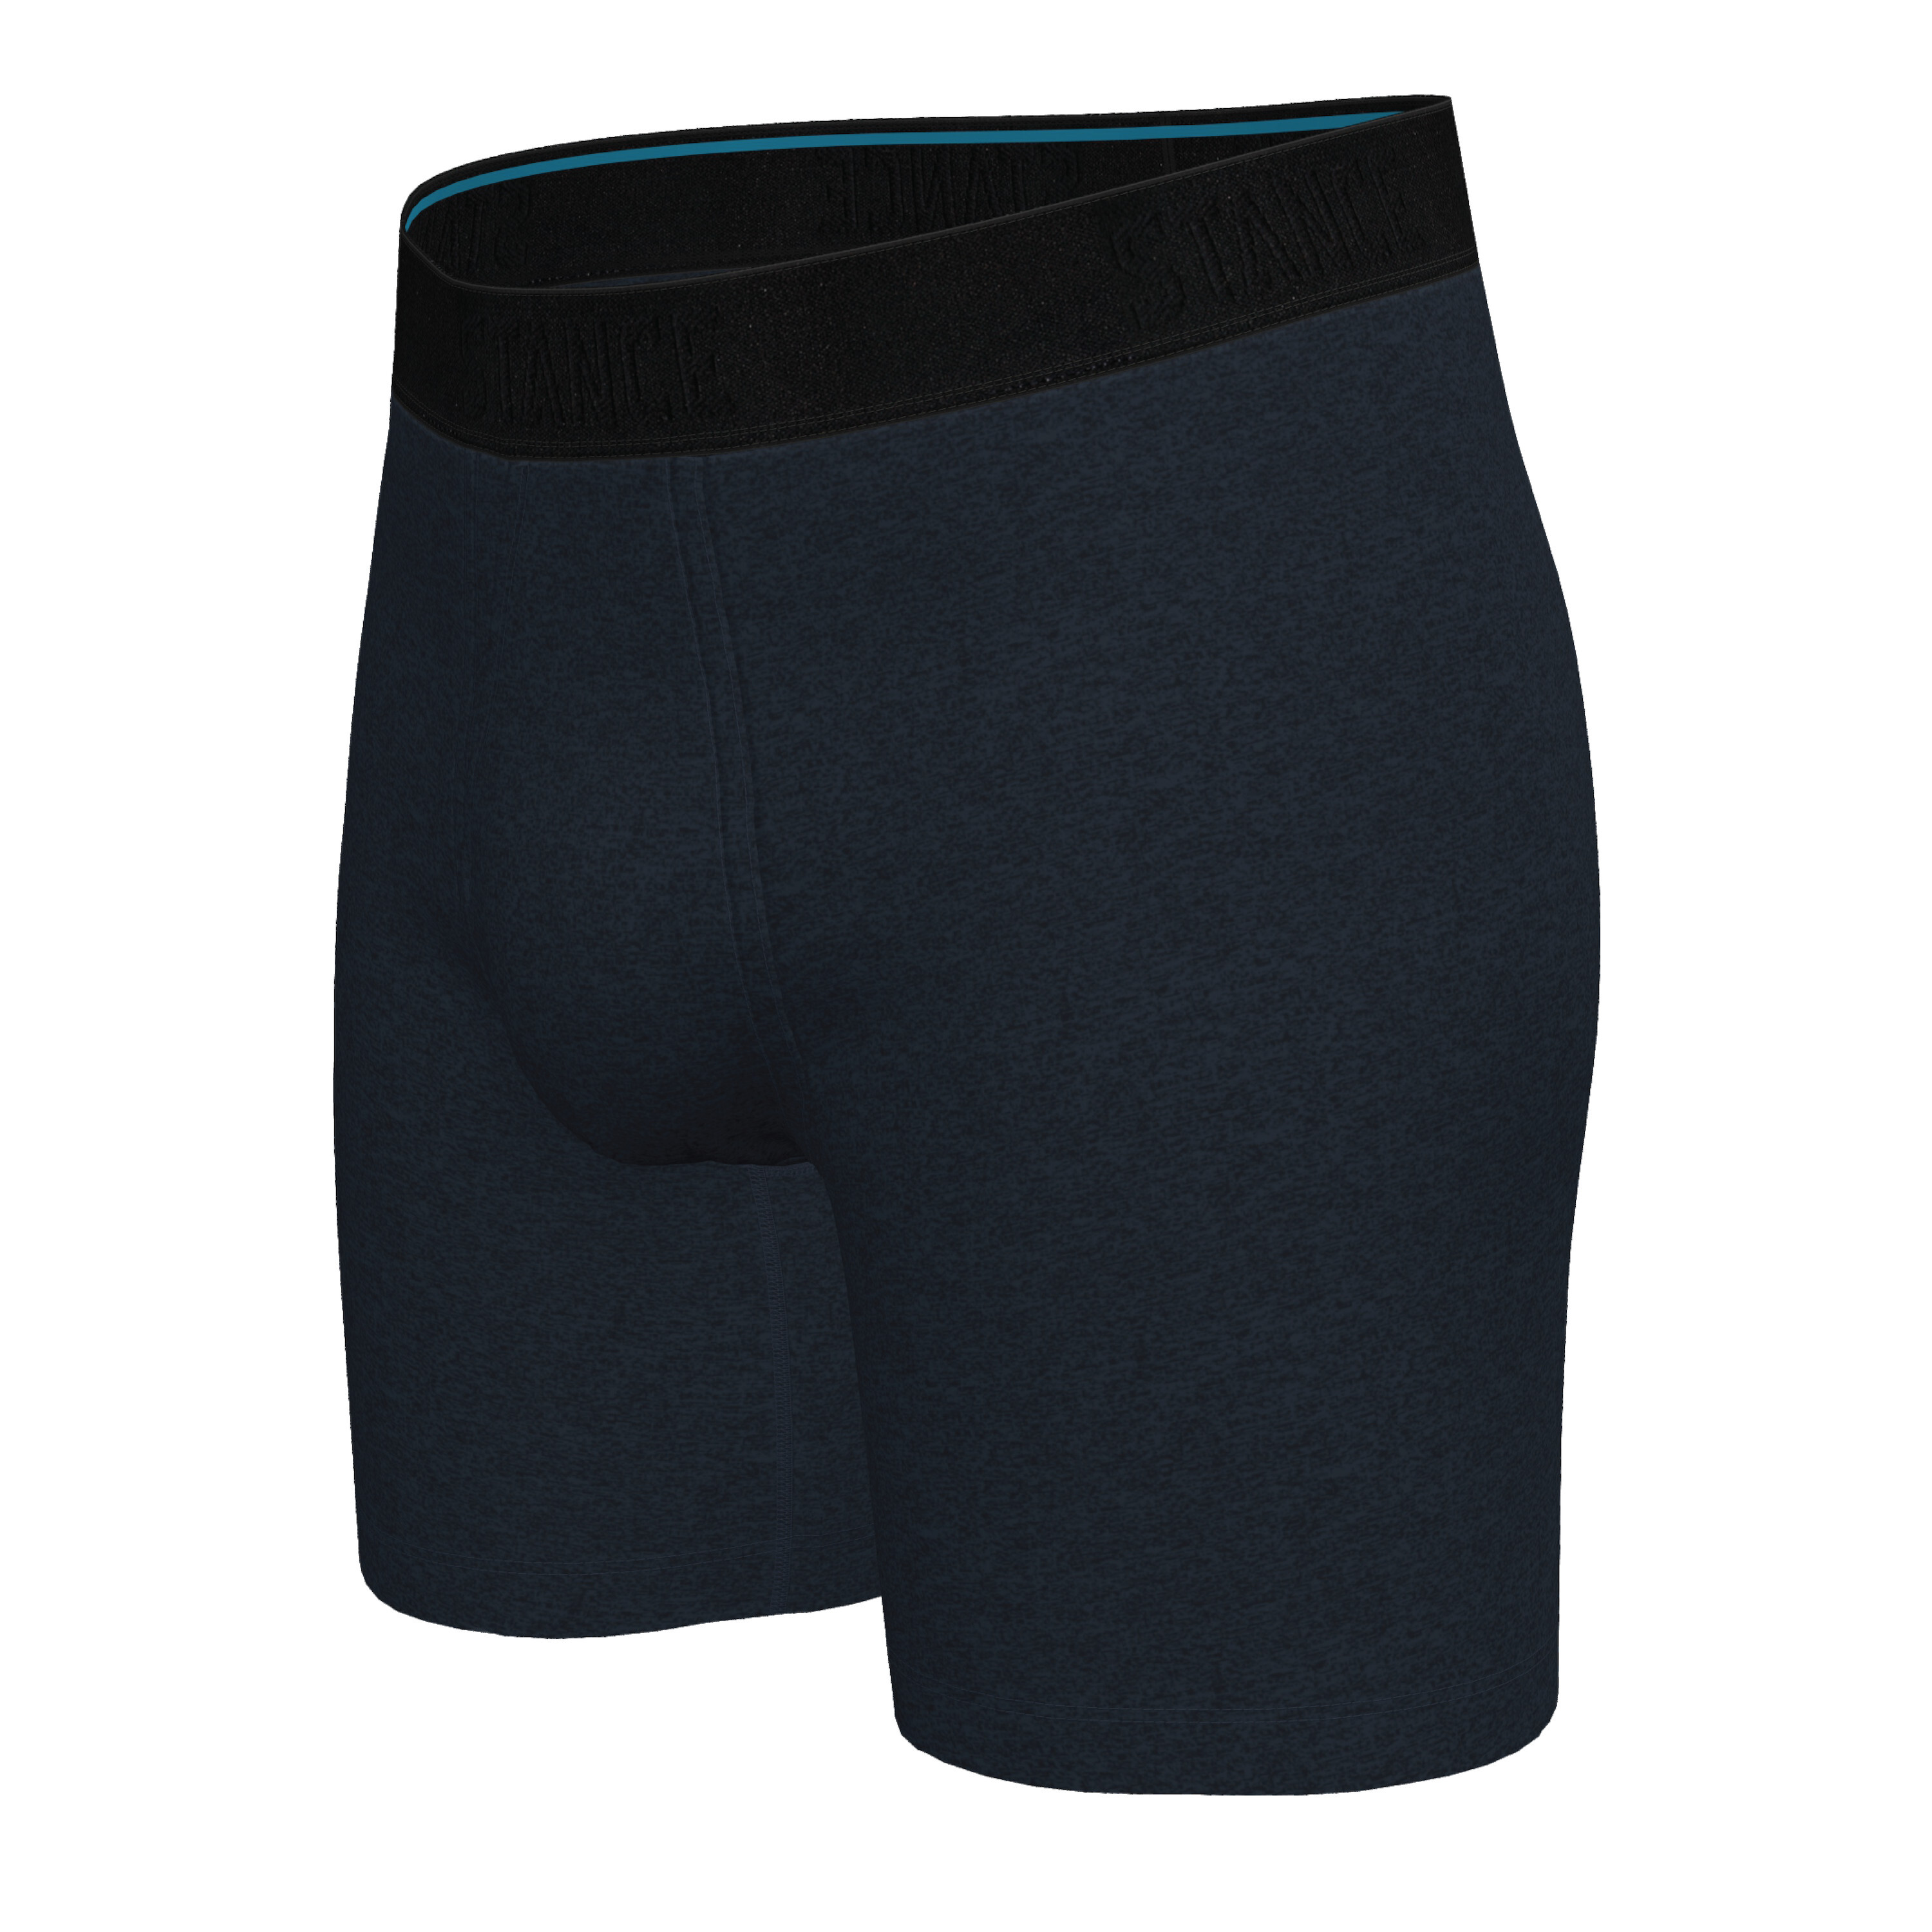 Stance Men's CottonBlend Boxer Briefs Underwear assorted sizes and styles  NWOT